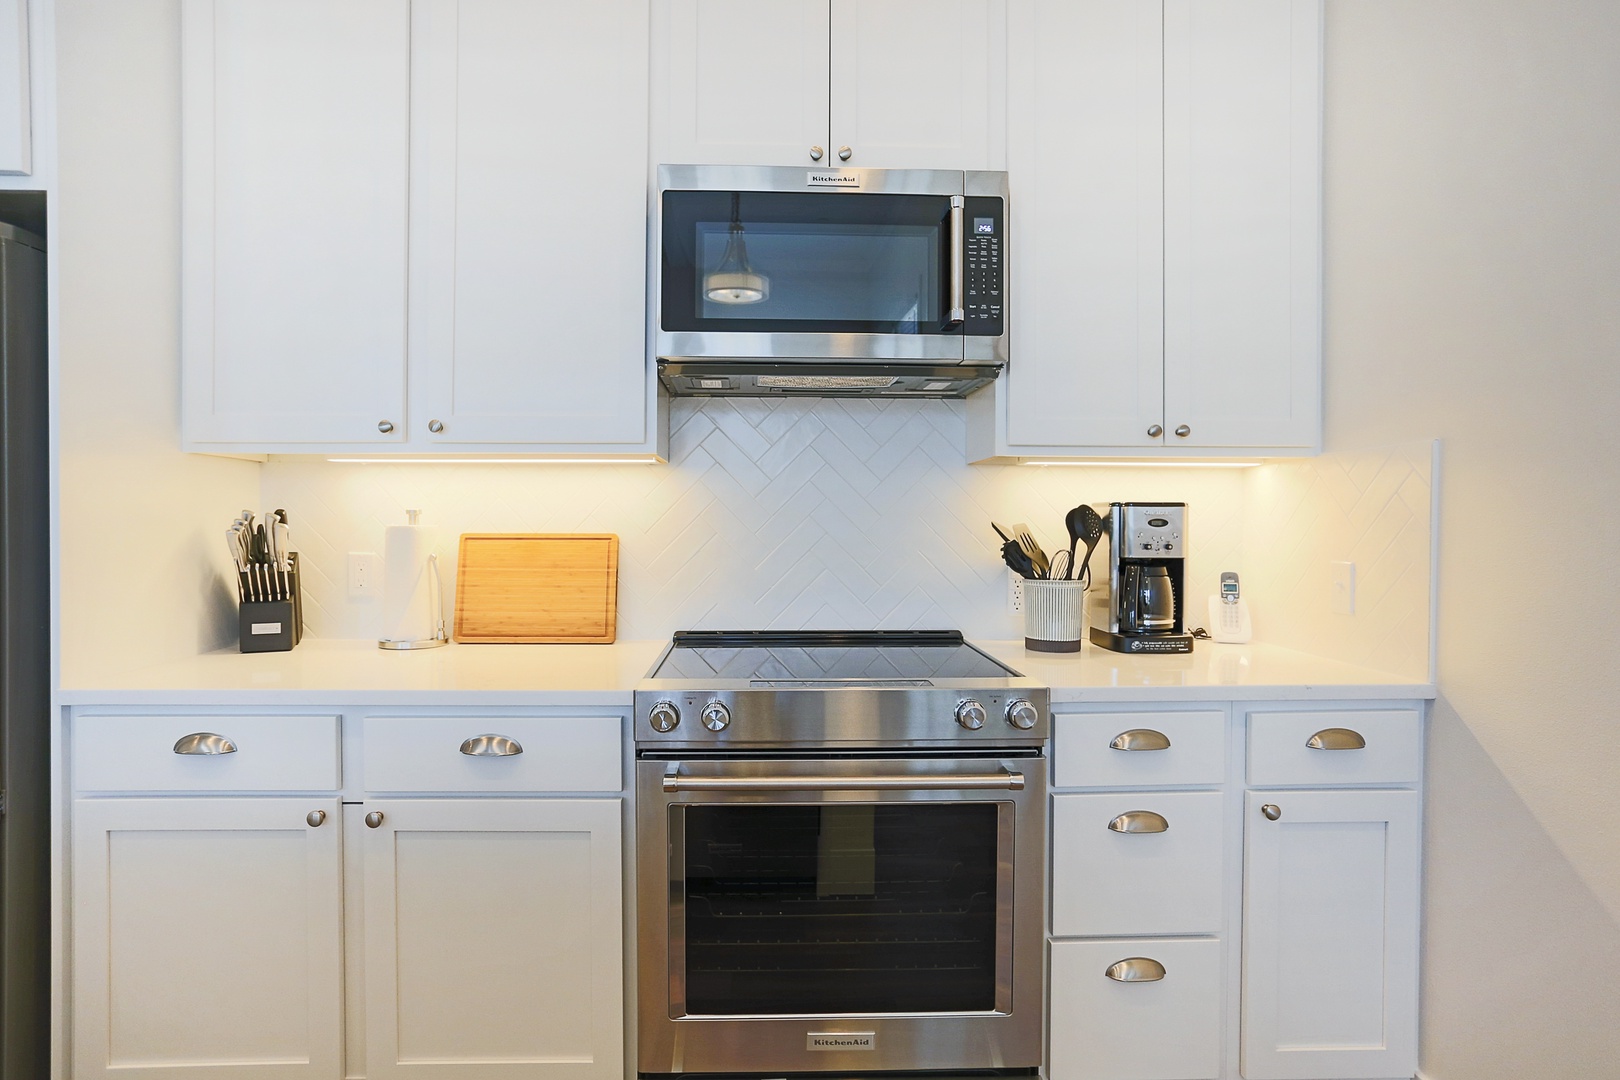 Beautiful stainless kitchen appliances